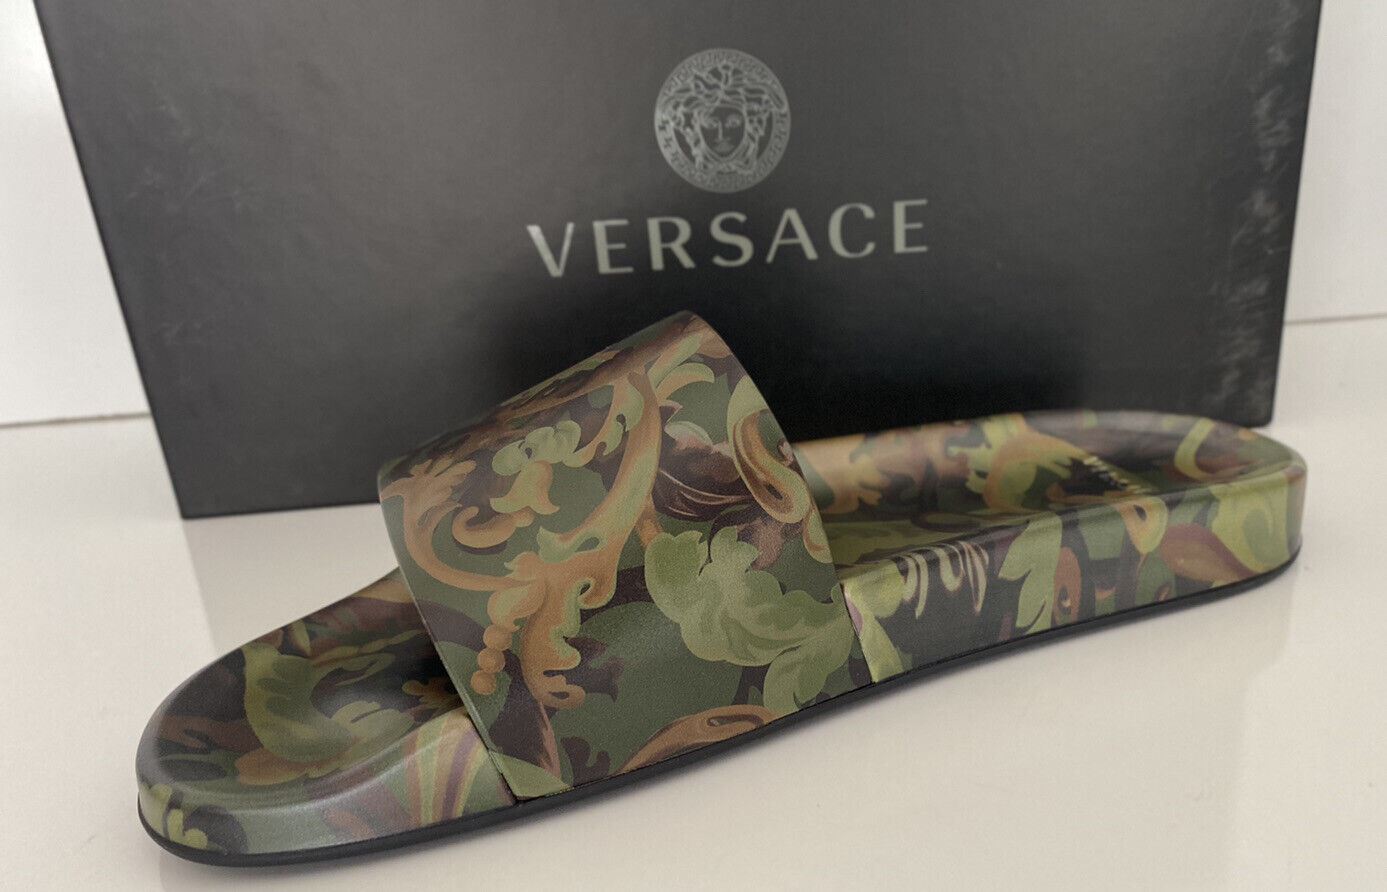 Сандалии-шлепанцы Versace Baroccoflage, цвет хаки 8, США, 395 долларов США (41 евро) IT DSU6516 